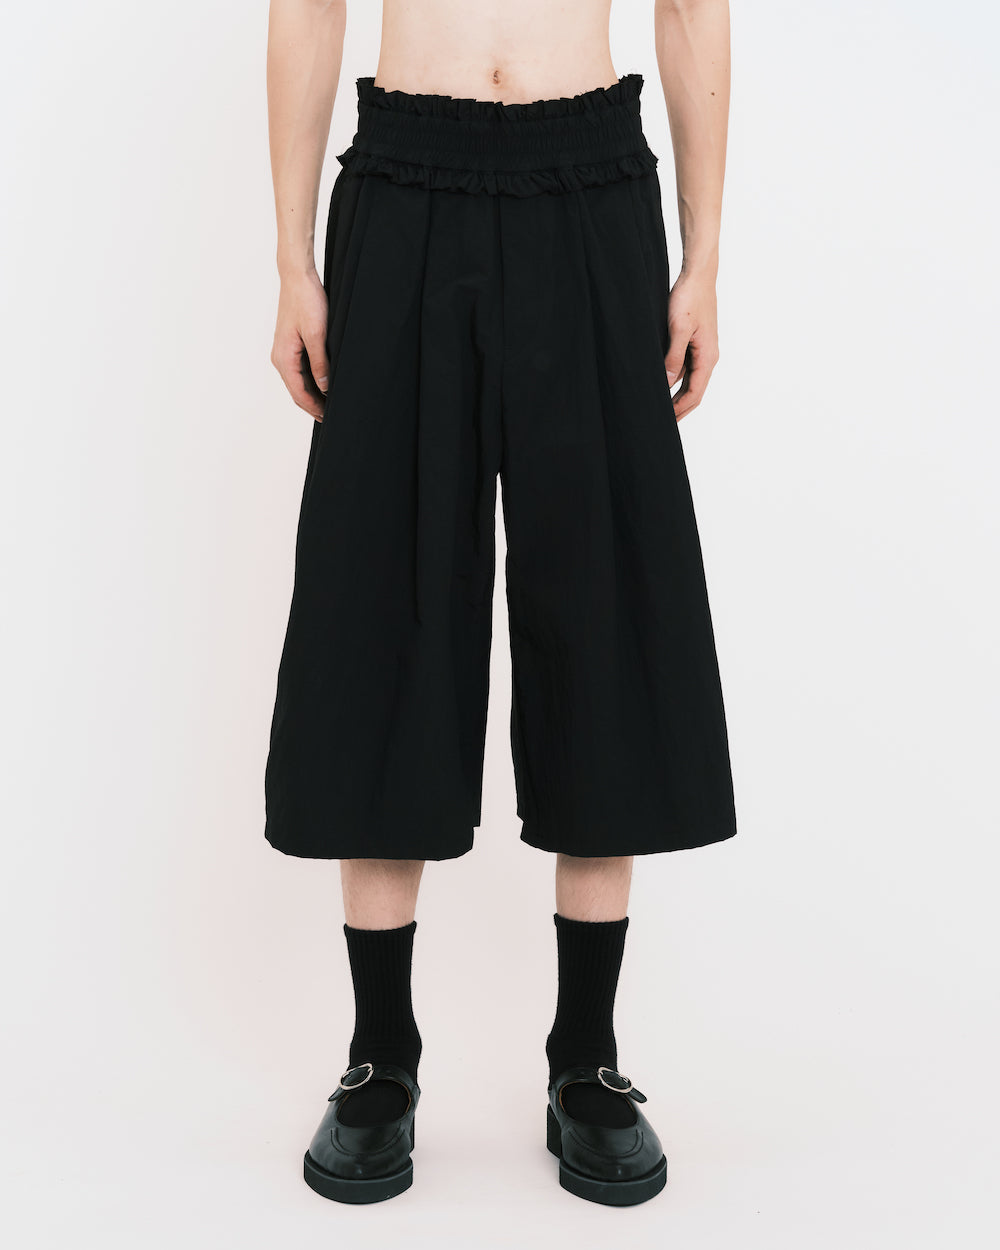 Thick Waist Gathered Skirt Shorts Type Ny